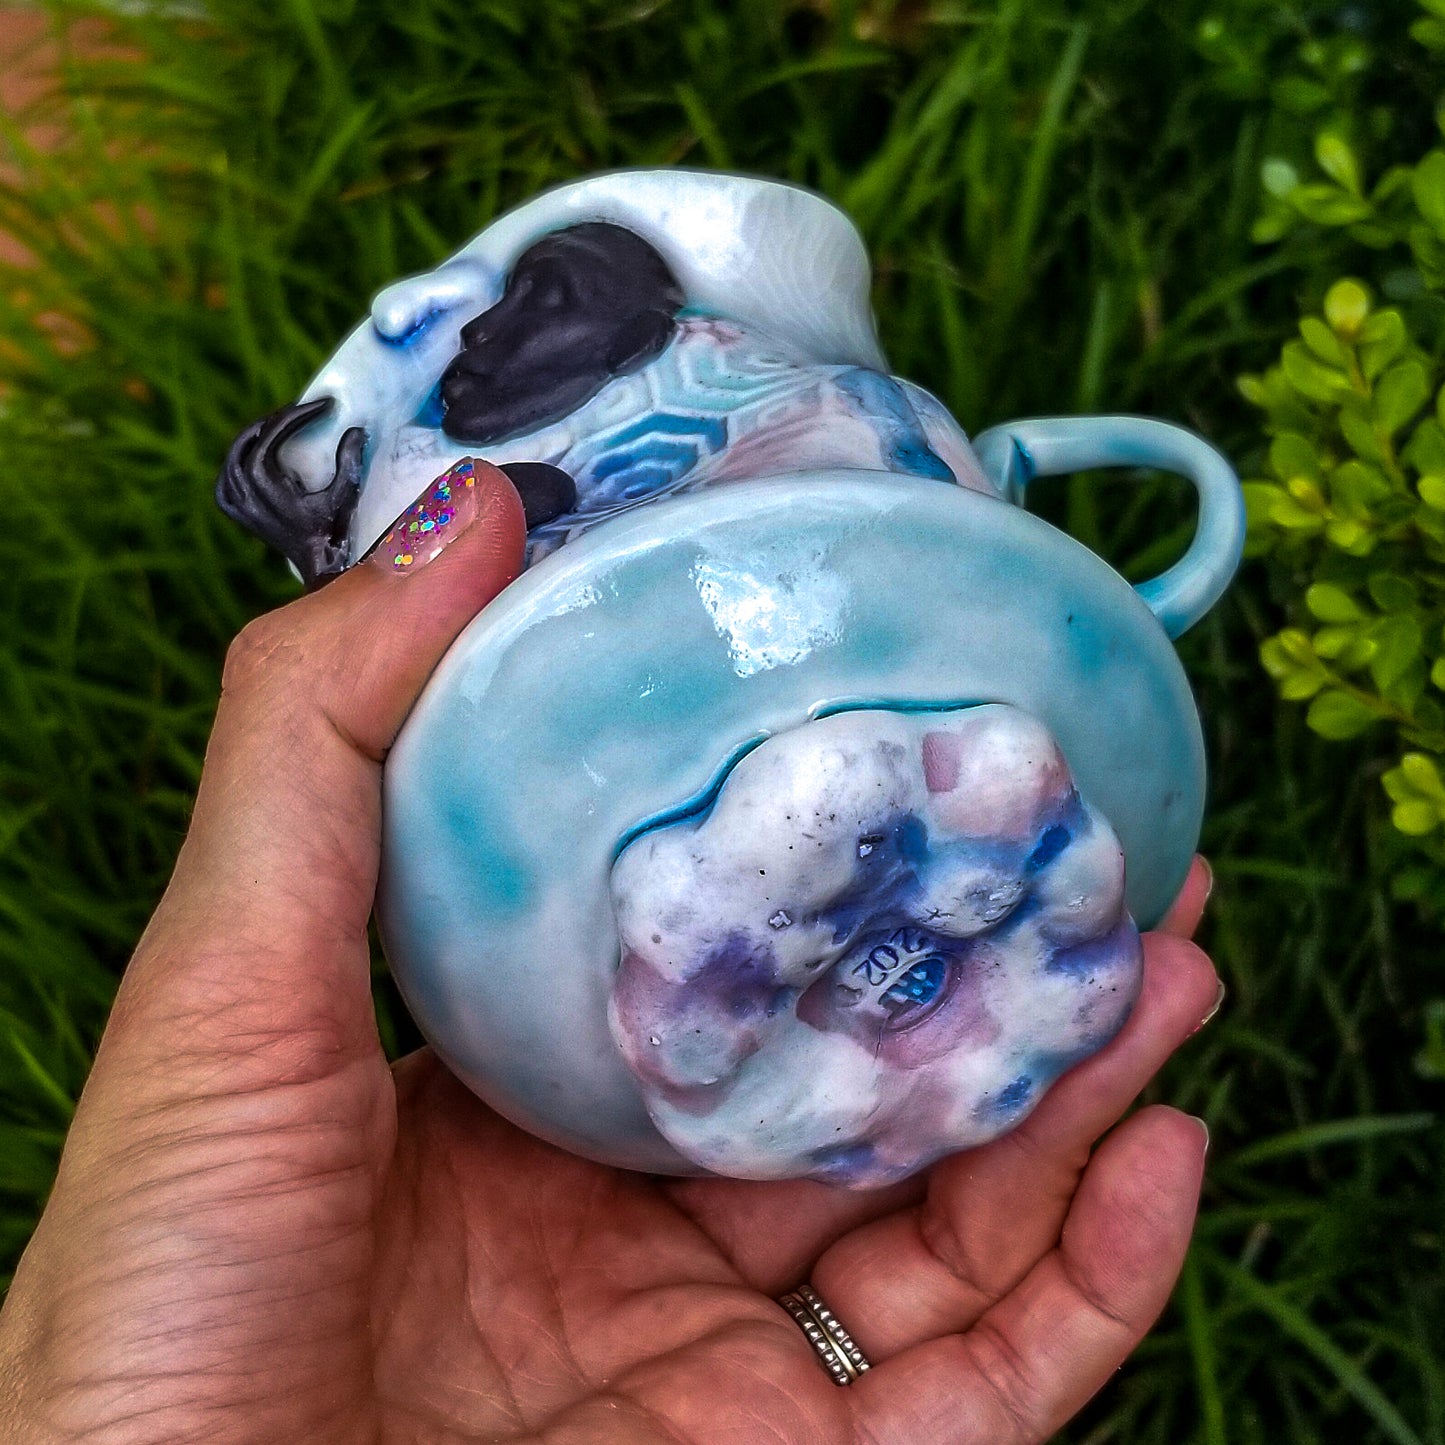 Bottom detail of handmade porcelain mug with figurative sculptural elements